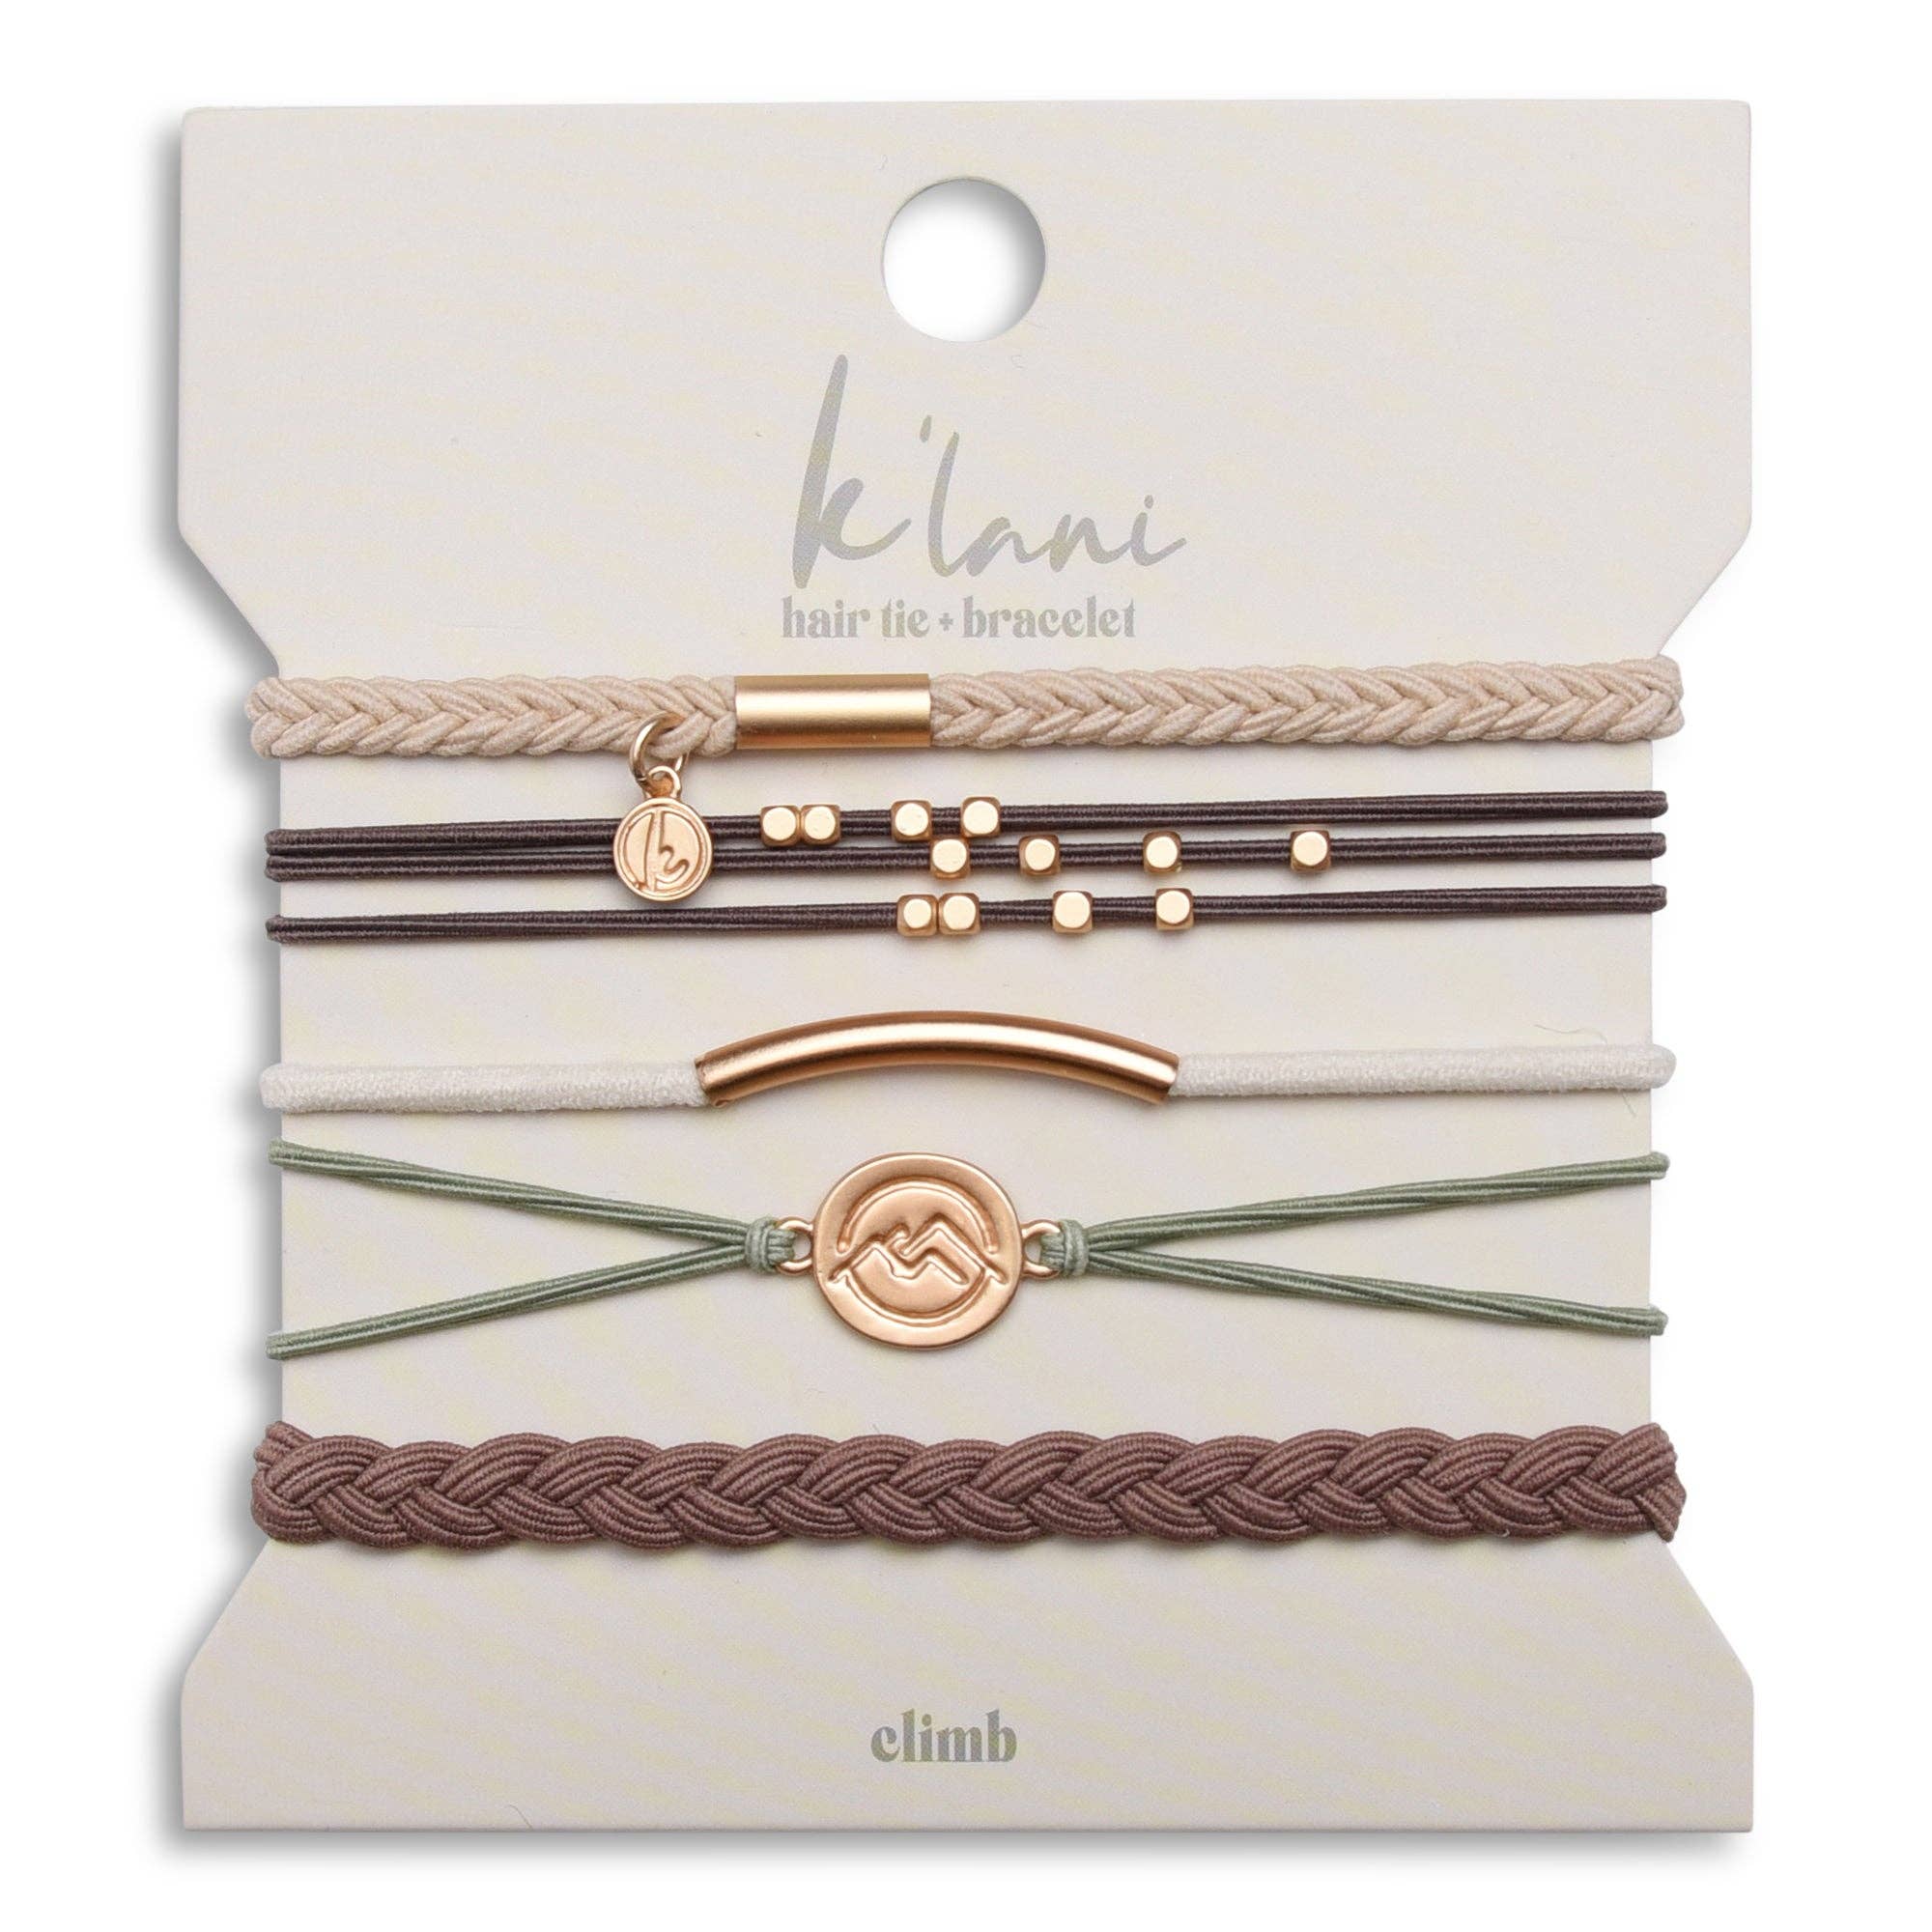 K'Lani hair tie bracelets - Climb